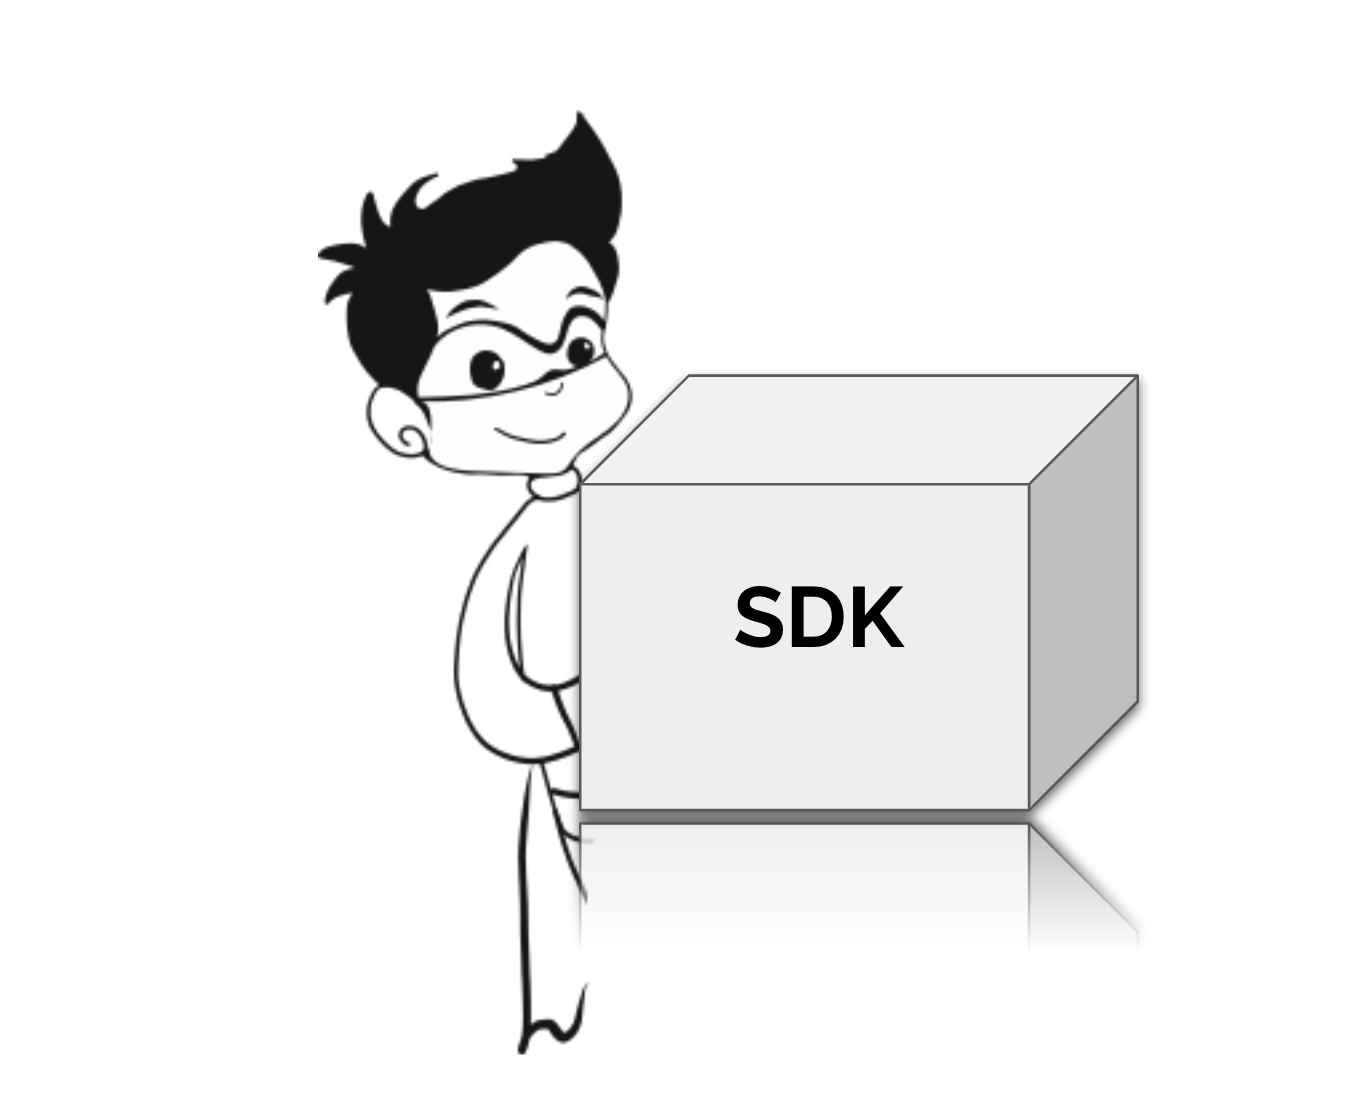 A cartoon man holding a box labeled "SDK".